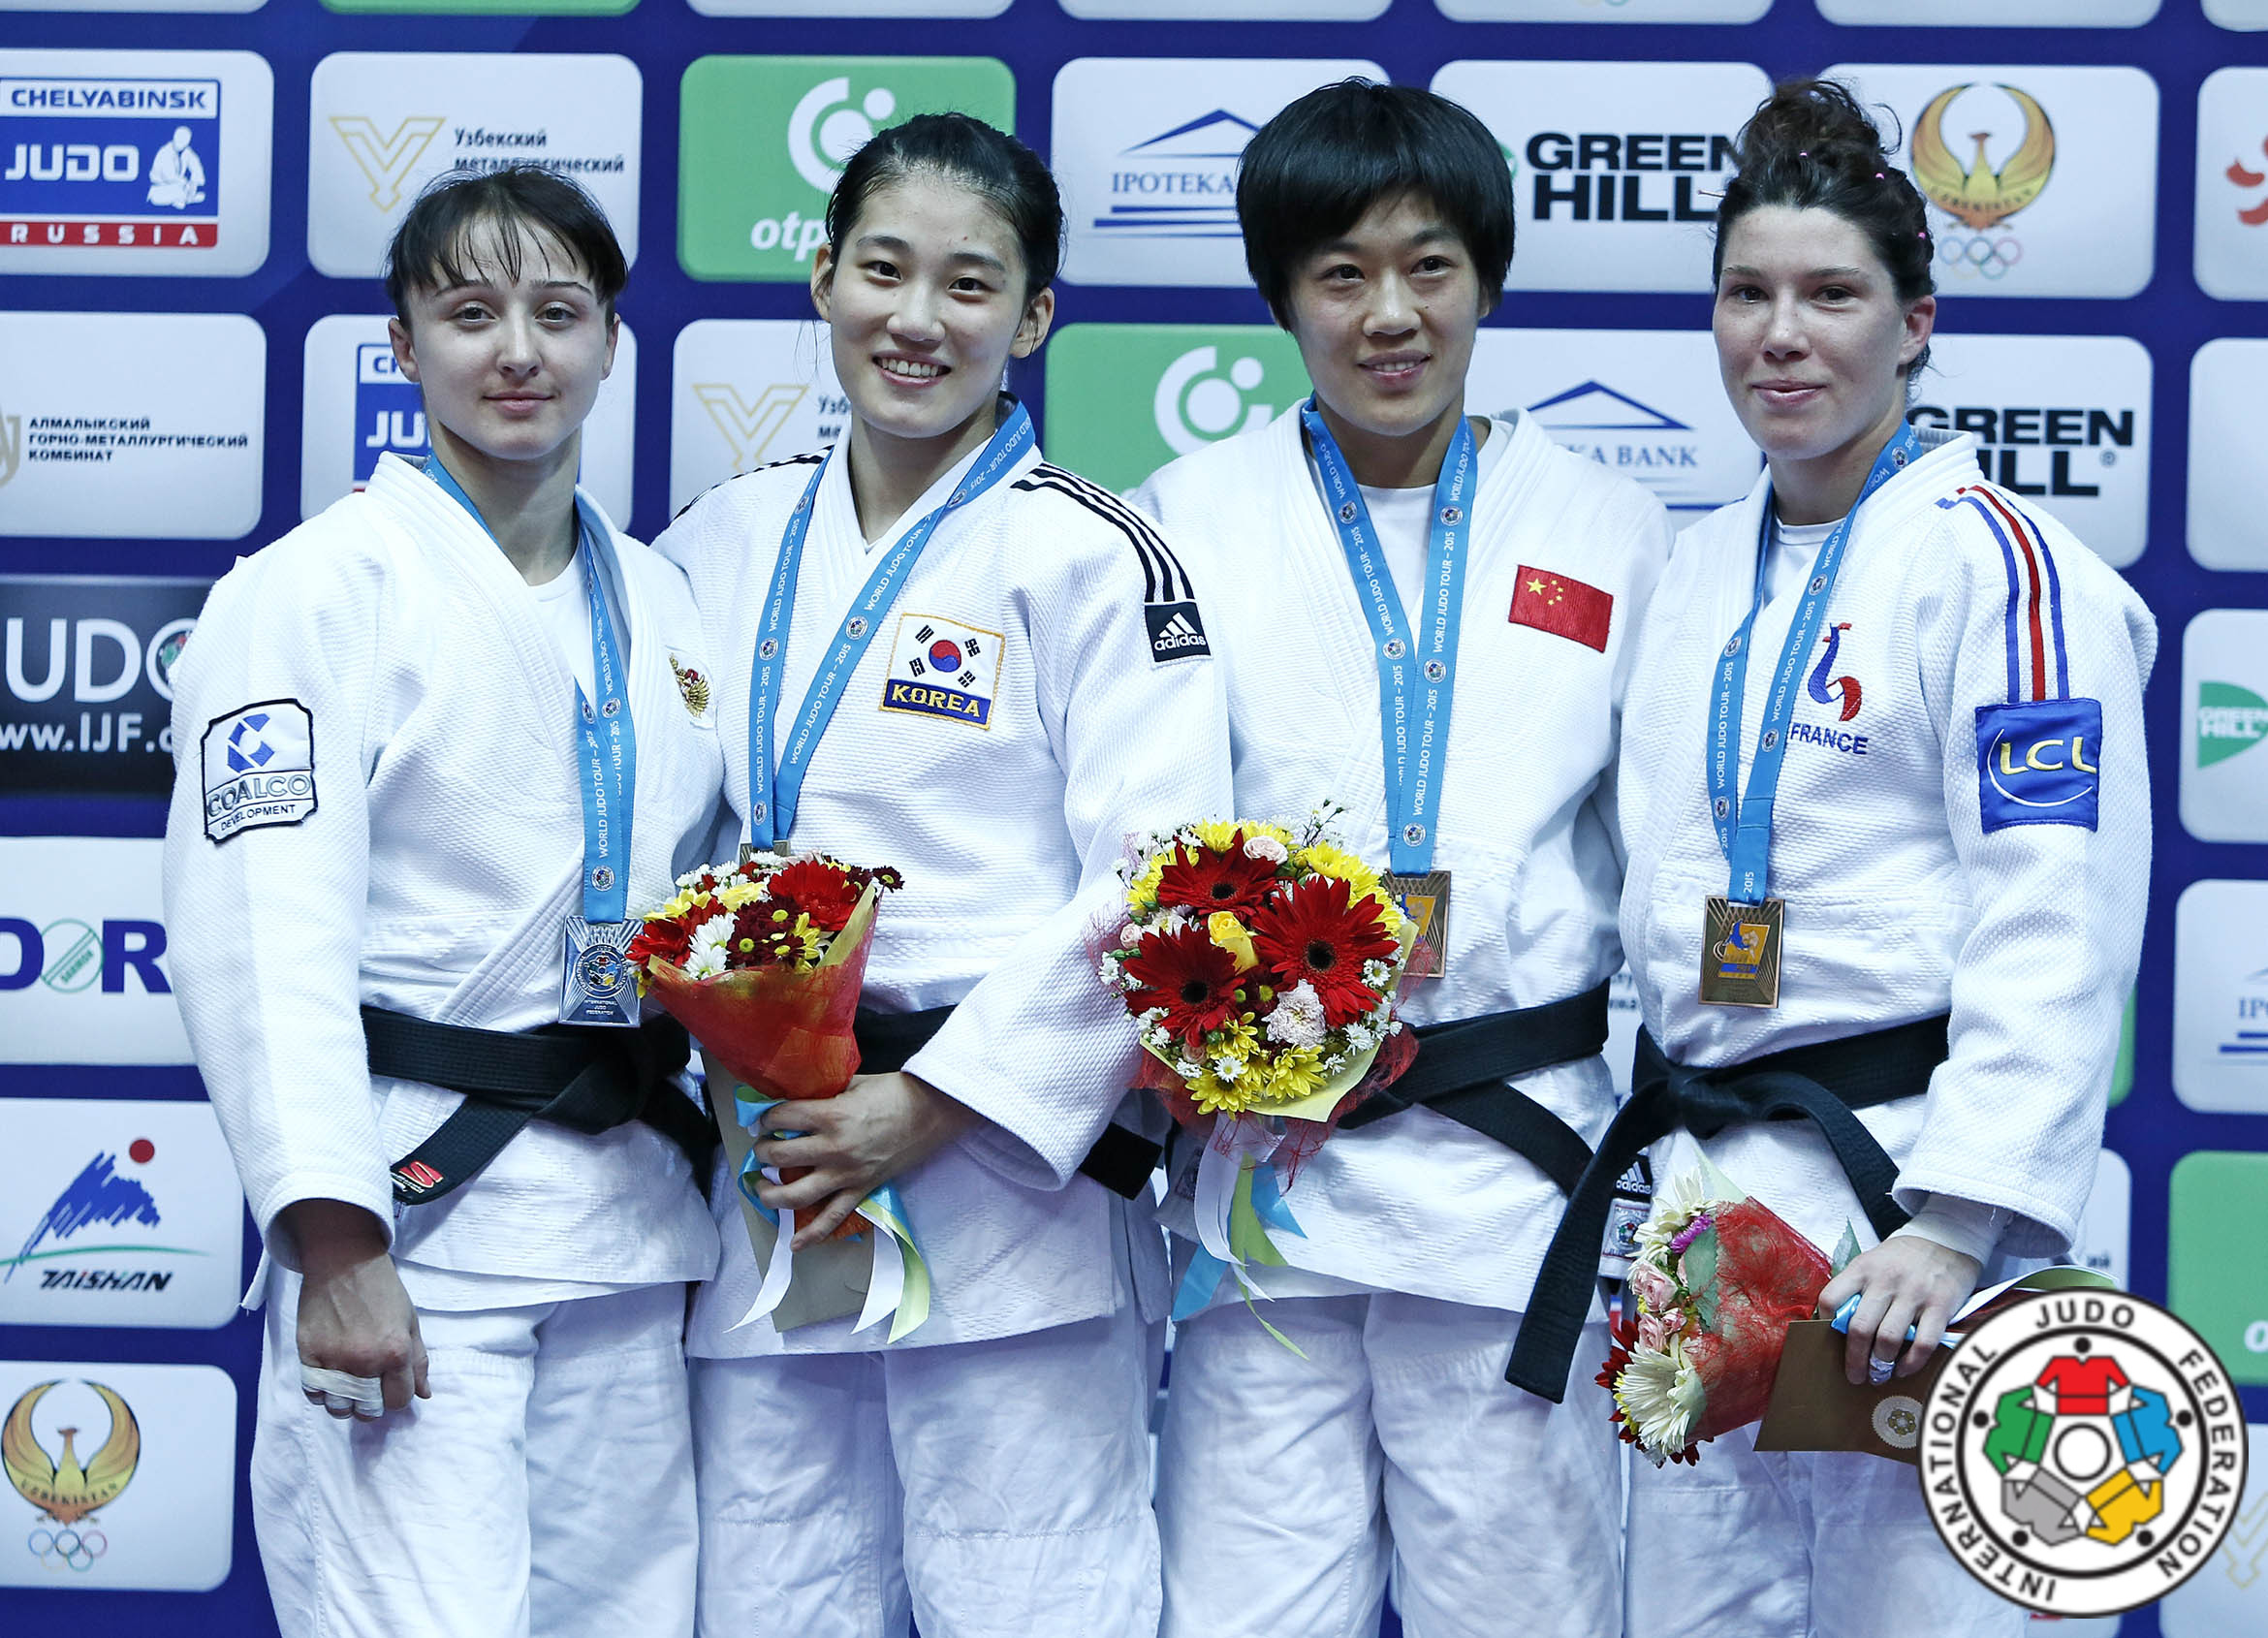 20151001_Tashkent_final57_ZABLUDINA, Irina (RUS) - KIM, Jan Di (KOR)_podium